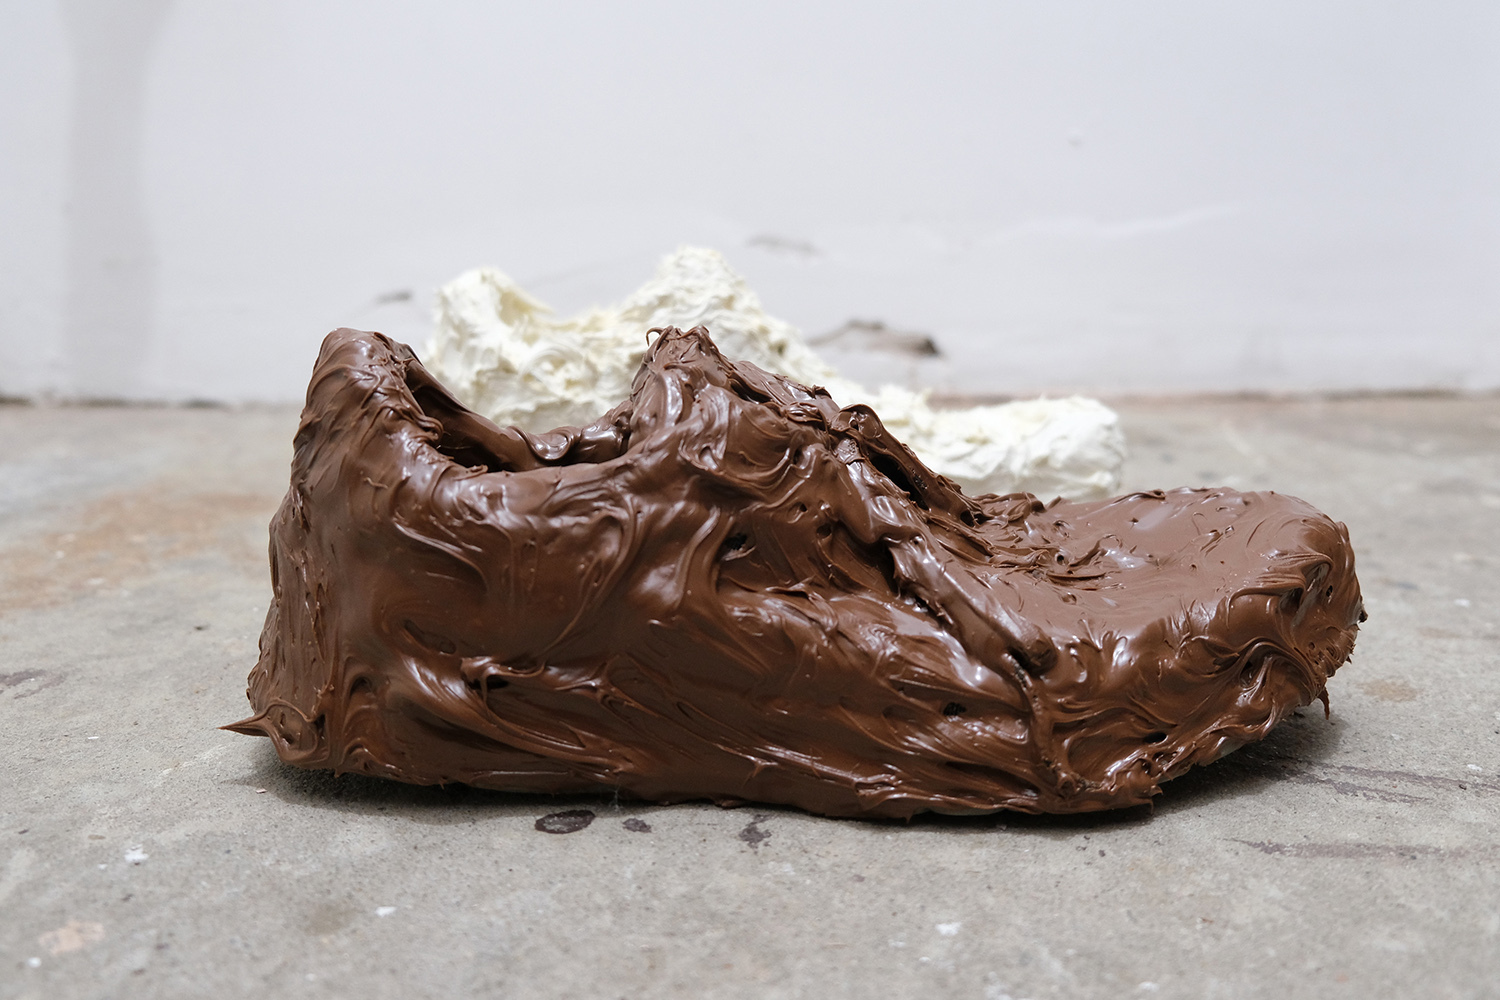 Thomas Rentmeister, 2021, Saucony Kivara, Shoes, Nutella, Penaten Cream, 33 x 34 x 14 cm, 3